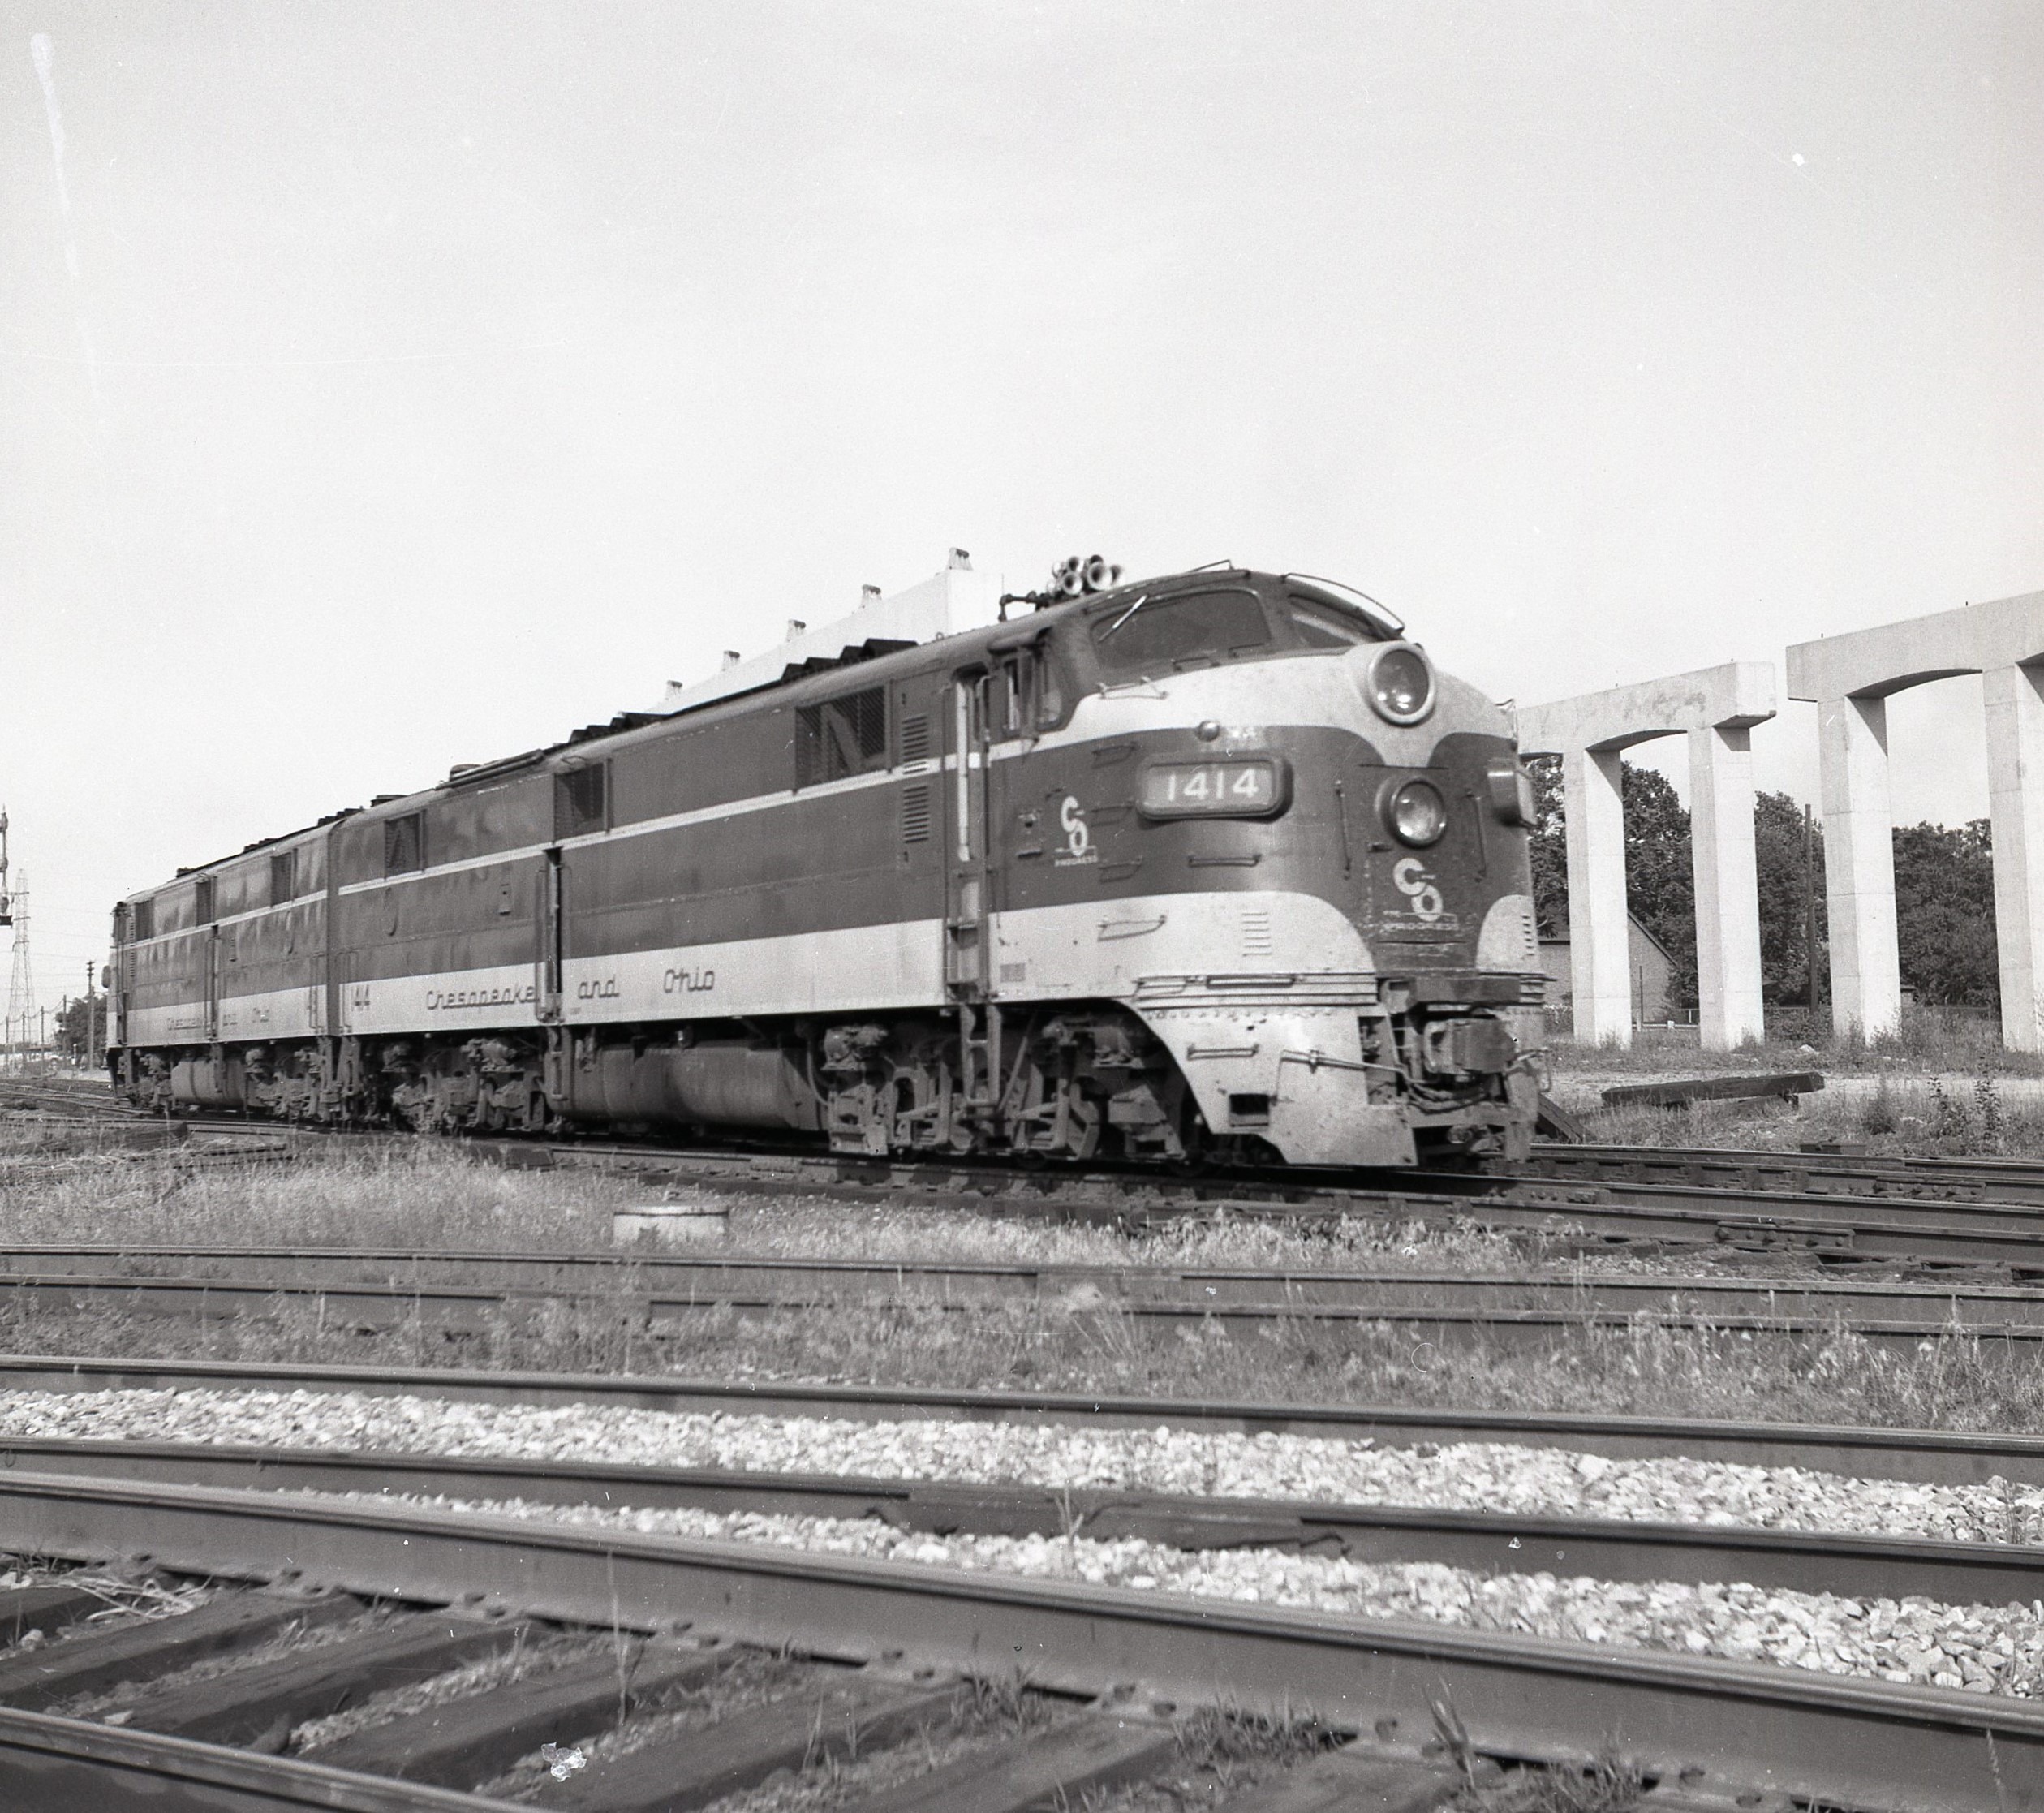 Chesapeake and Ohio | Detroit, Michigan | EMD E7a 1414 plus one diesel-electric locomotives | 1965 | Elmer Kremkow photo